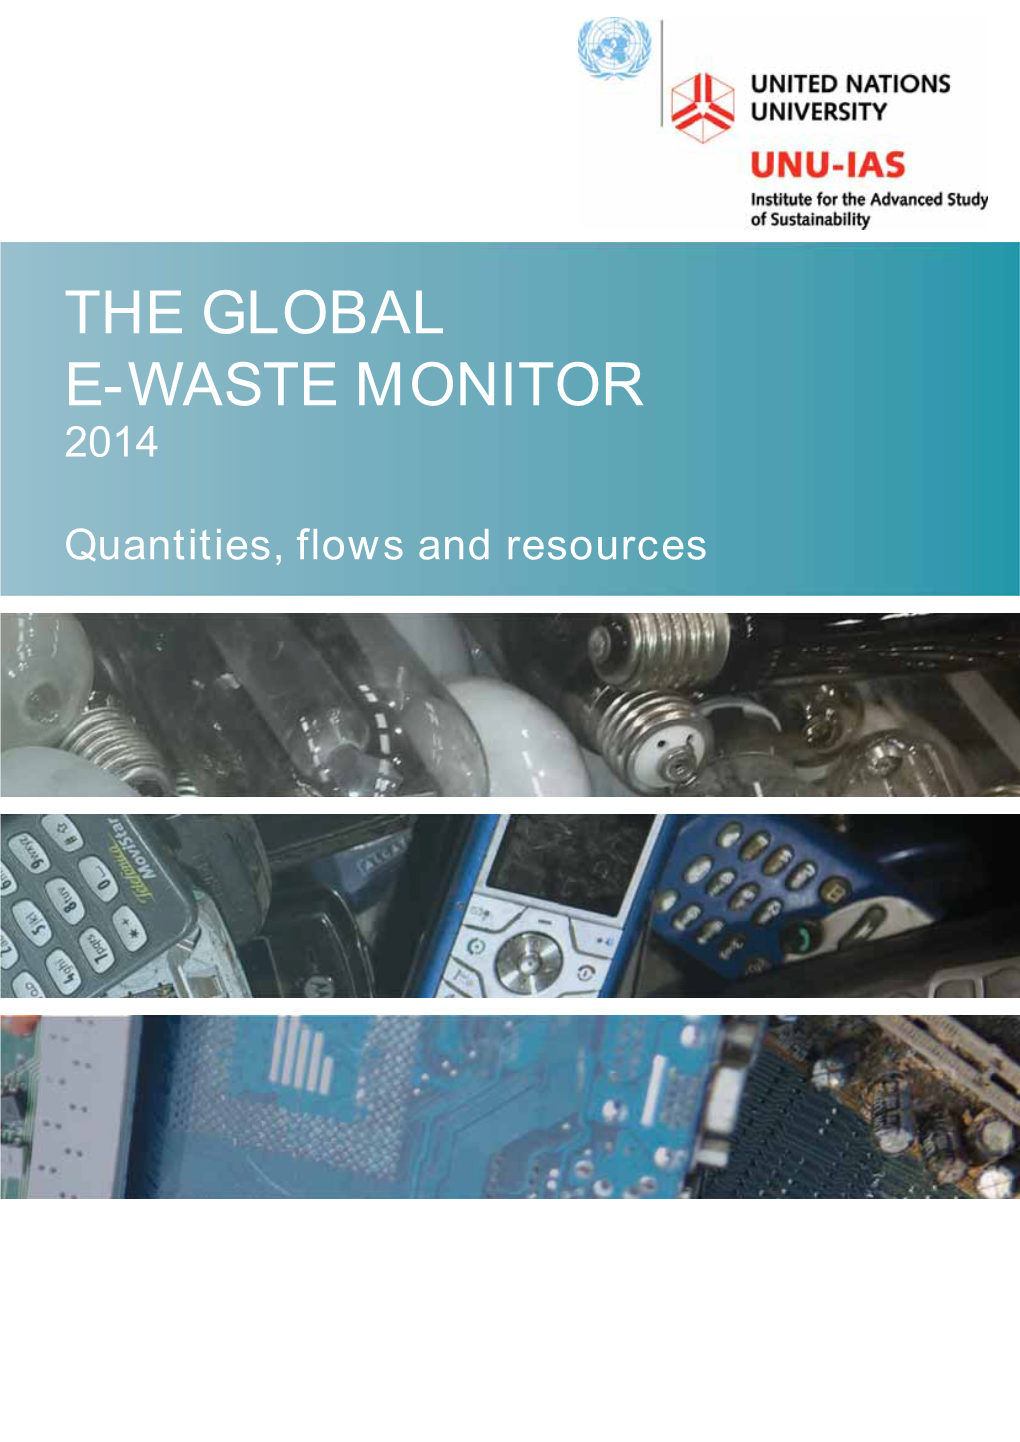 The Global E-Waste Monitor 2014